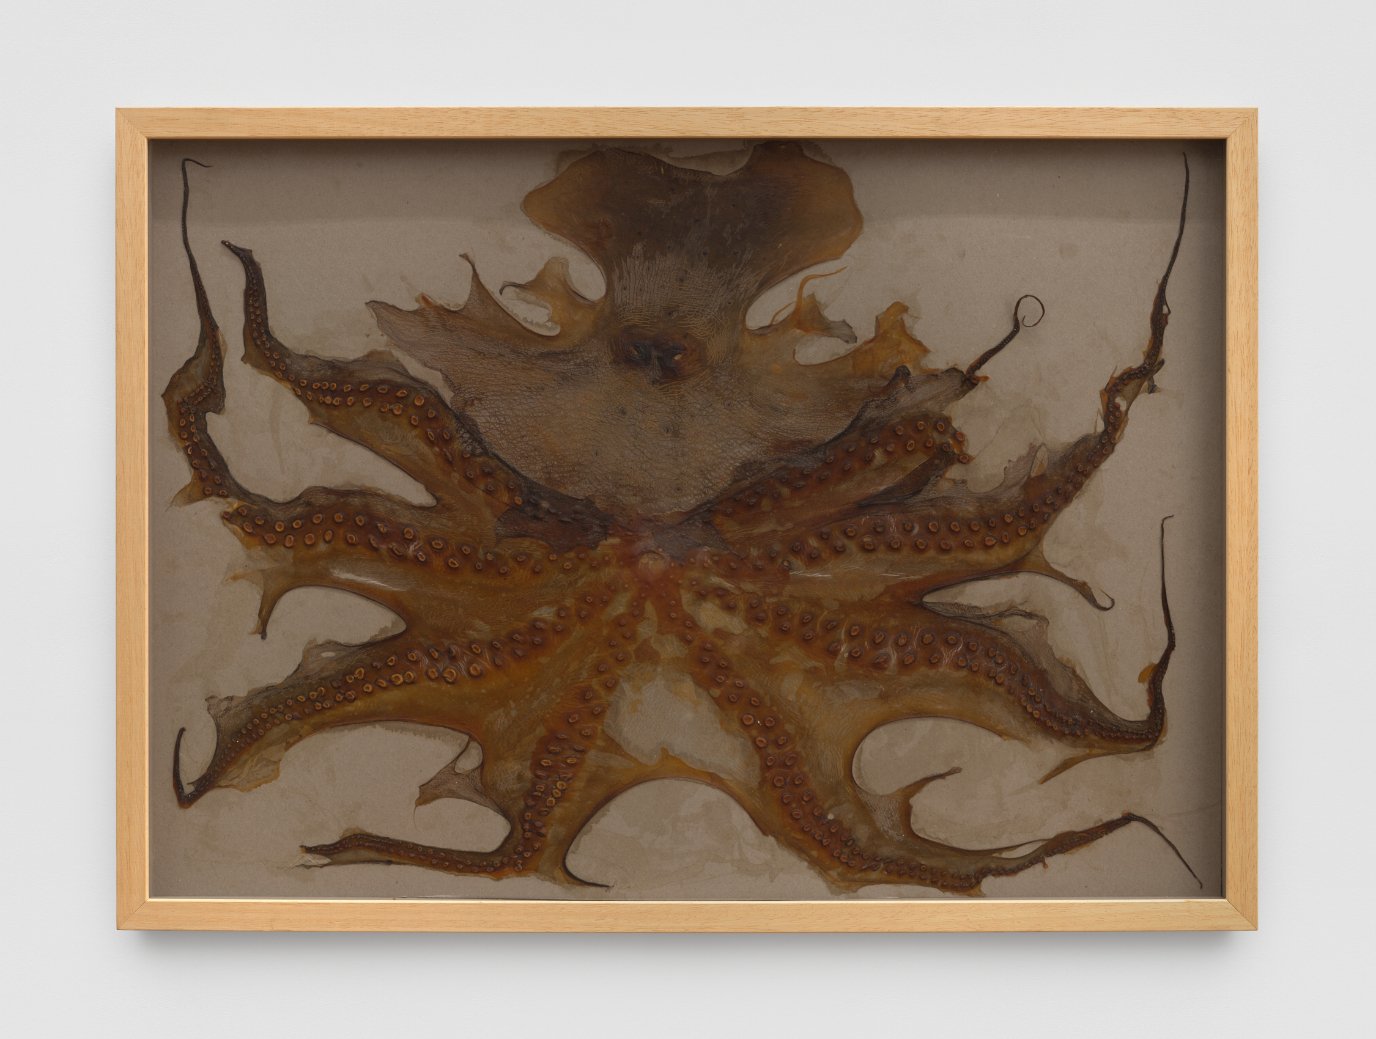  Jorge Peris  Depredador II , 2018  octopus leather on cardboard  53h x 73w cm / 20.87h x 28.74w in Courtesy of the Artist Photography credit: Shark Senesac, New Document 